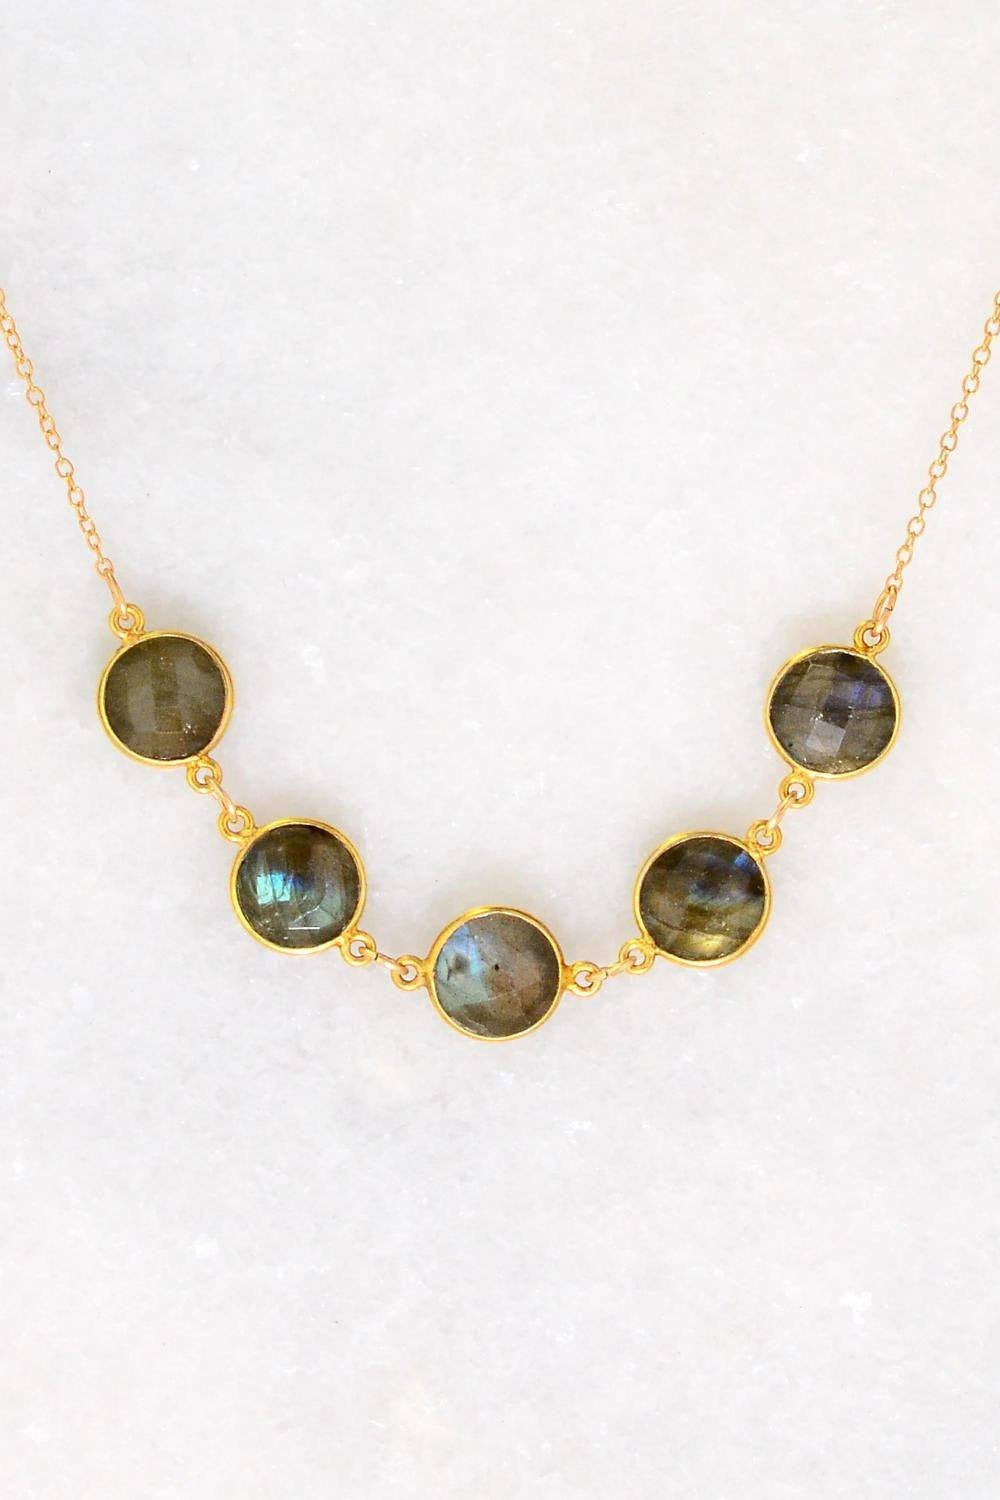 Labradorite Necklace - Bezel set Necklace - Gemstone Necklace - Mother's Necklace - Gift for mom - Bridesmaid Gift